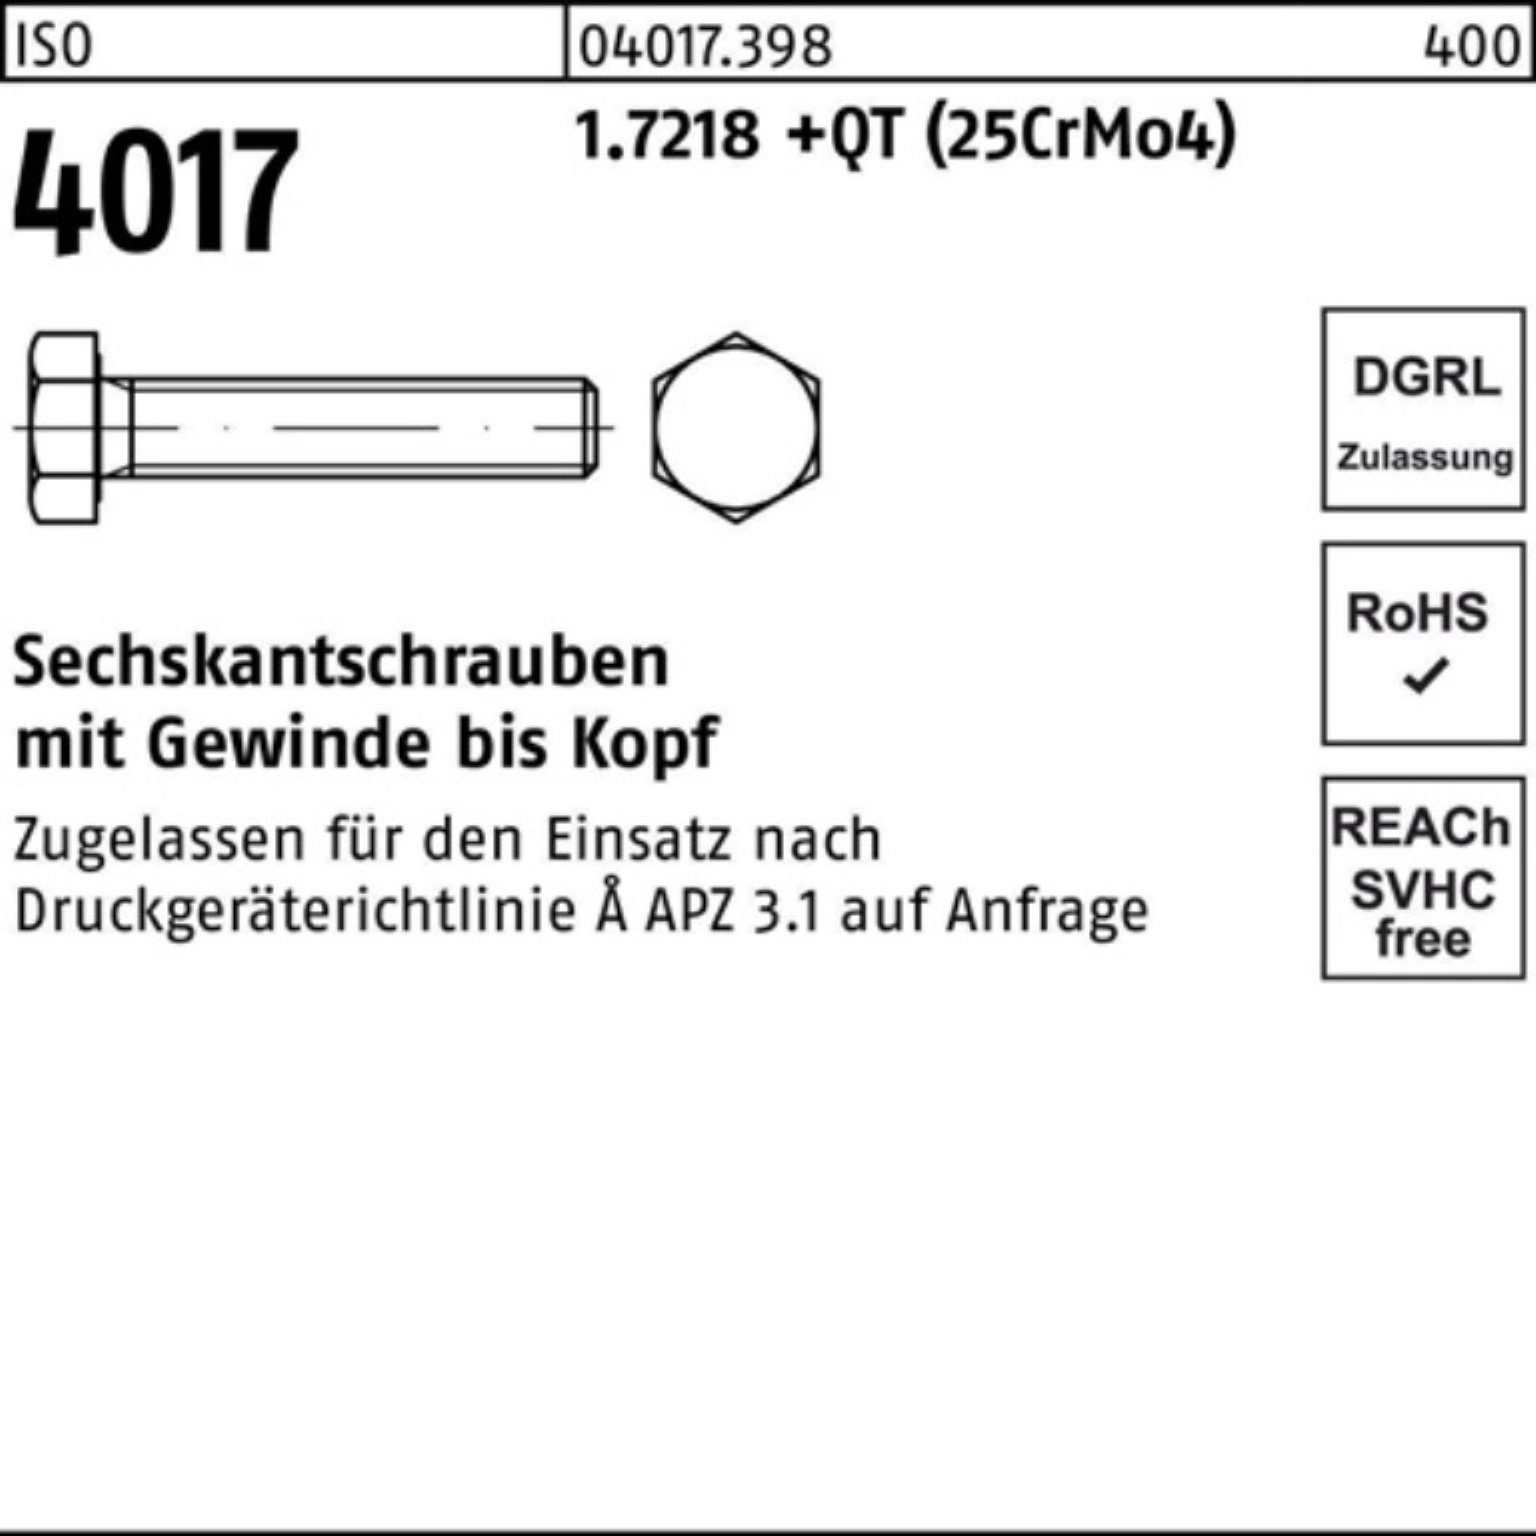 Sechskantschraube M20x 100er 160 ISO VG (25CrMo4) Pack Bufab 4017 +QT Sechskantschraube 1.7218